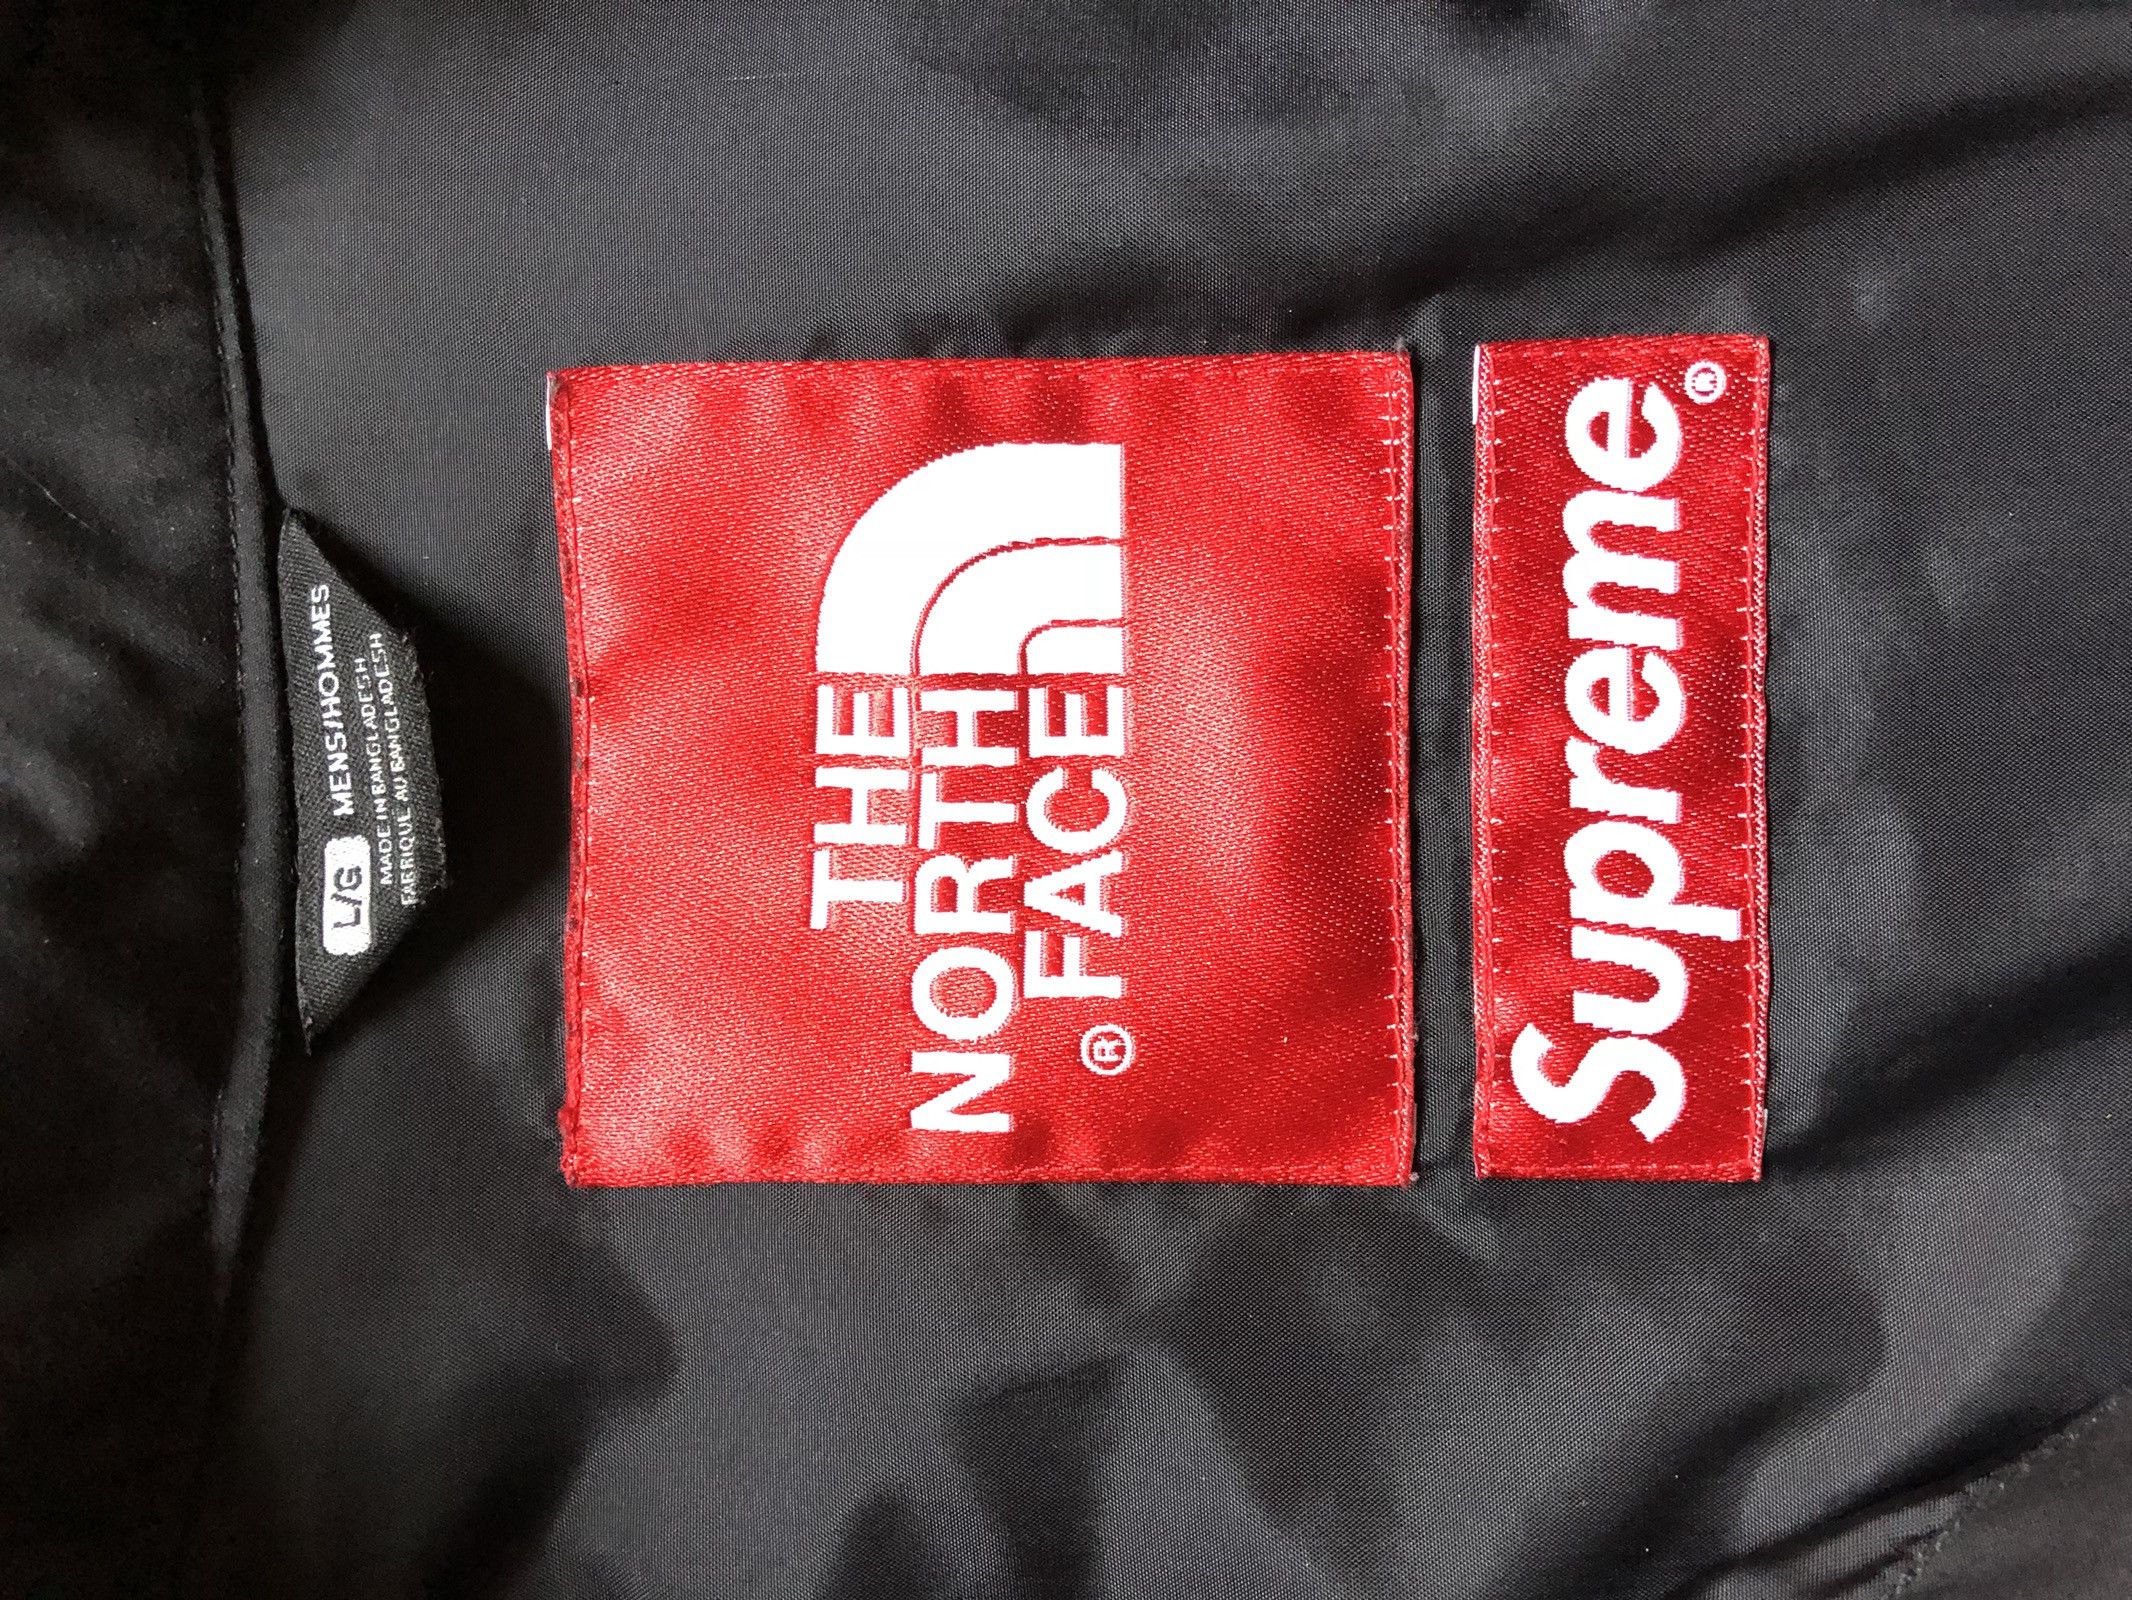 Supreme Supreme The North Face Expedition Coaches Jacket Large Black Size US L / EU 52-54 / 3 - 5 Thumbnail